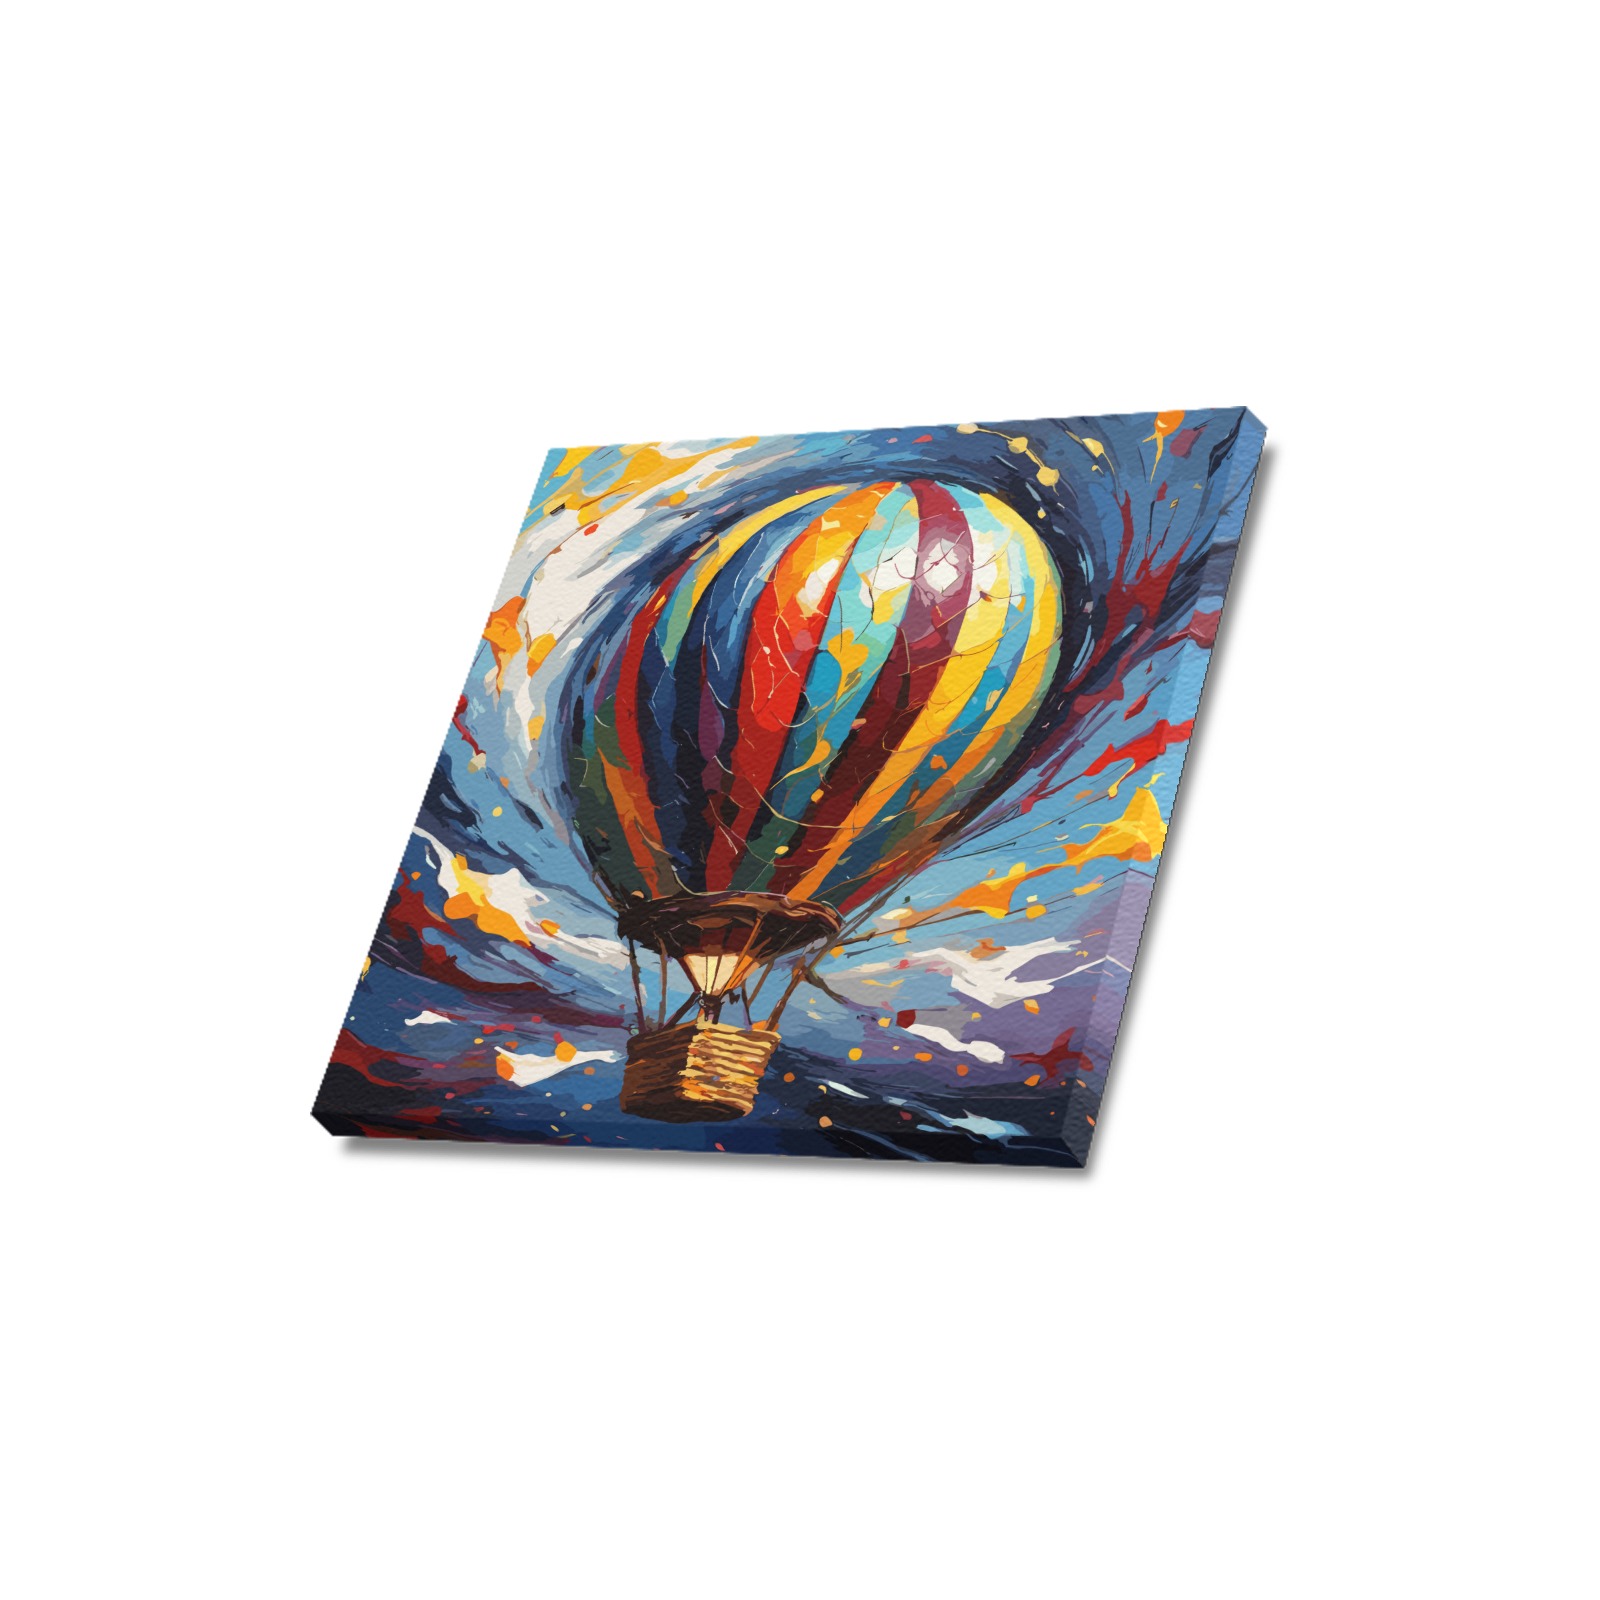 Imaginative hot air ballon beautiful colorful art. Upgraded Canvas Print 16"x16"